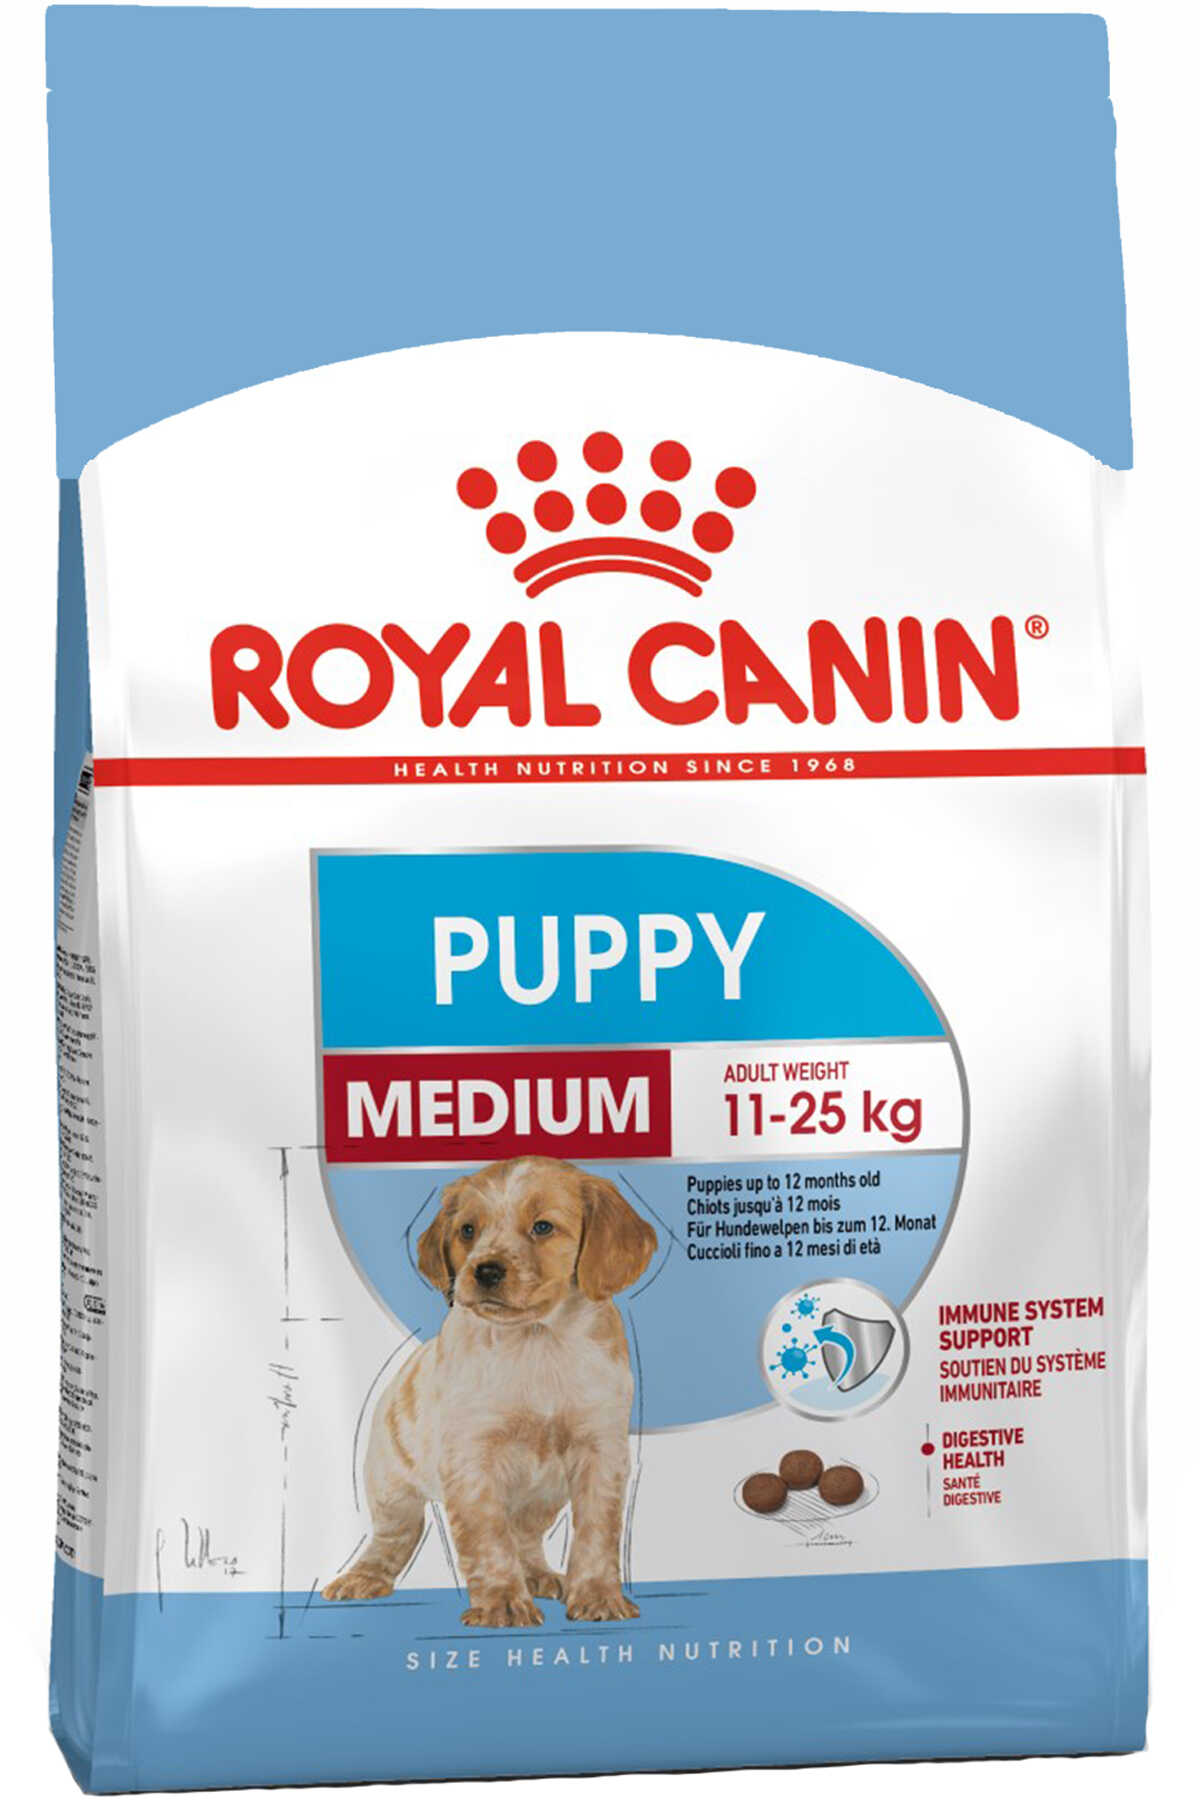 Royal Canin Medium Puppy Orta Irk Yavru Köpek Maması 15kg